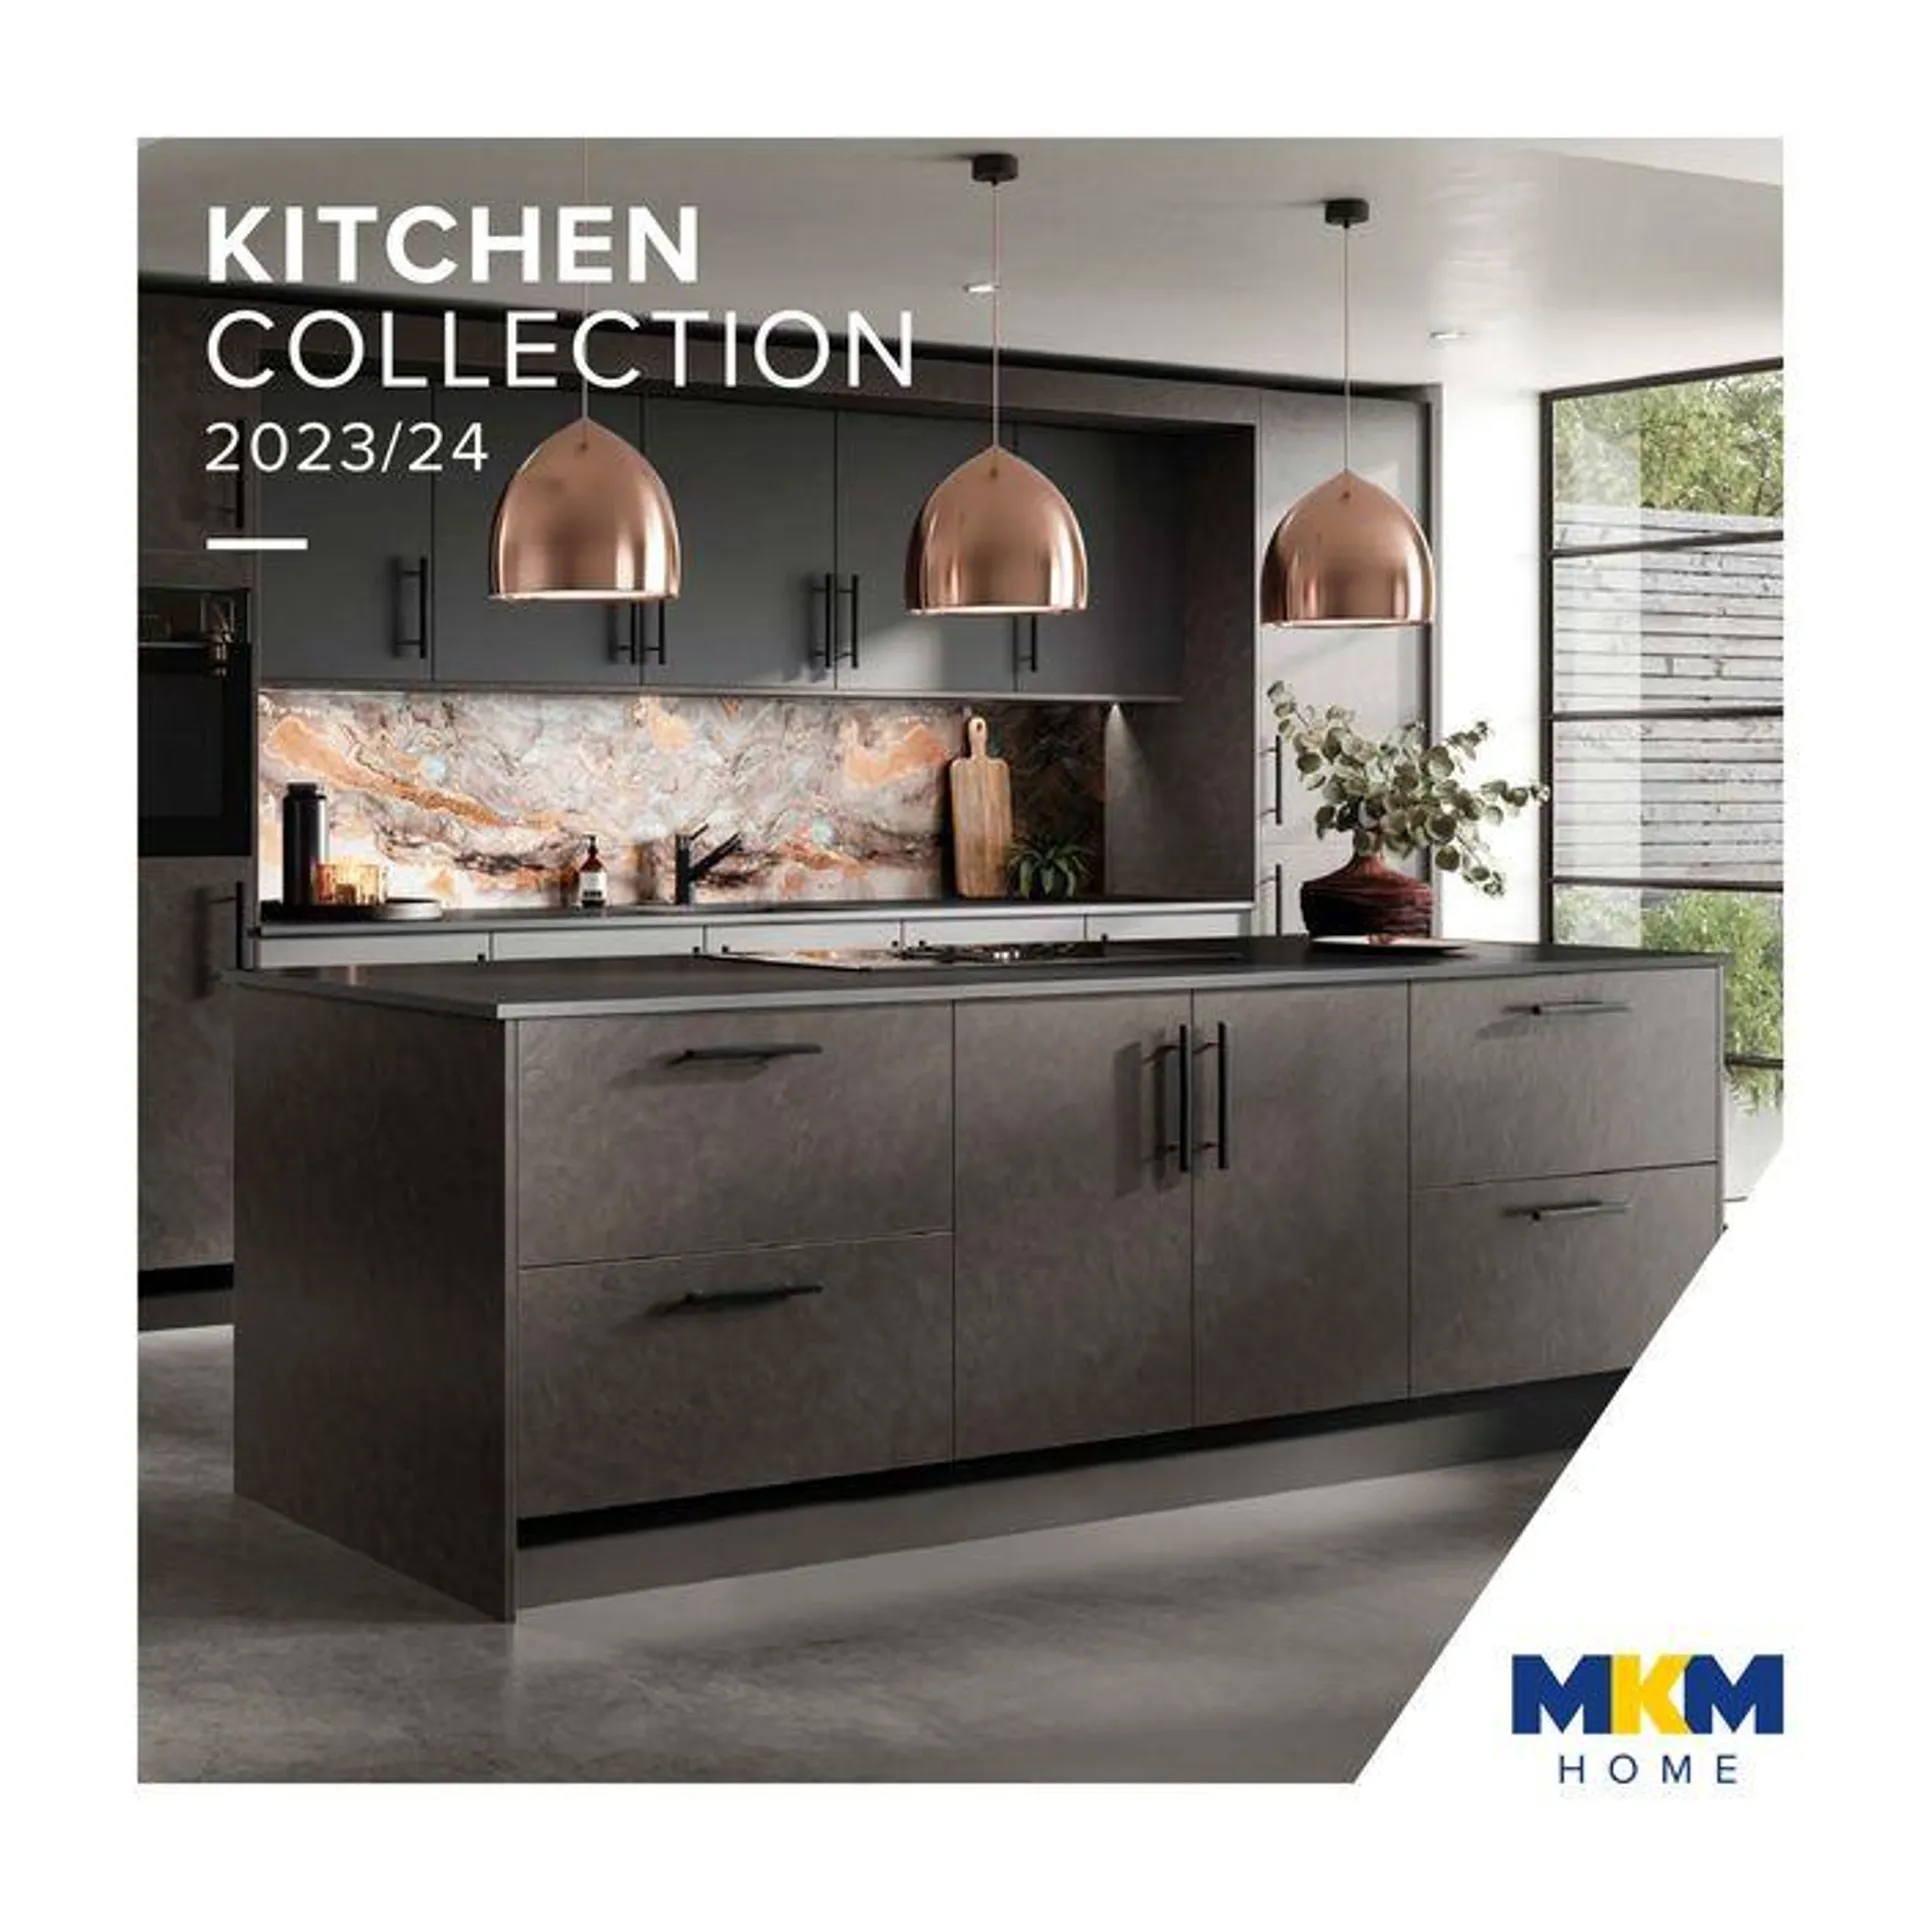 Kitchen Collection 2023/24 - 1